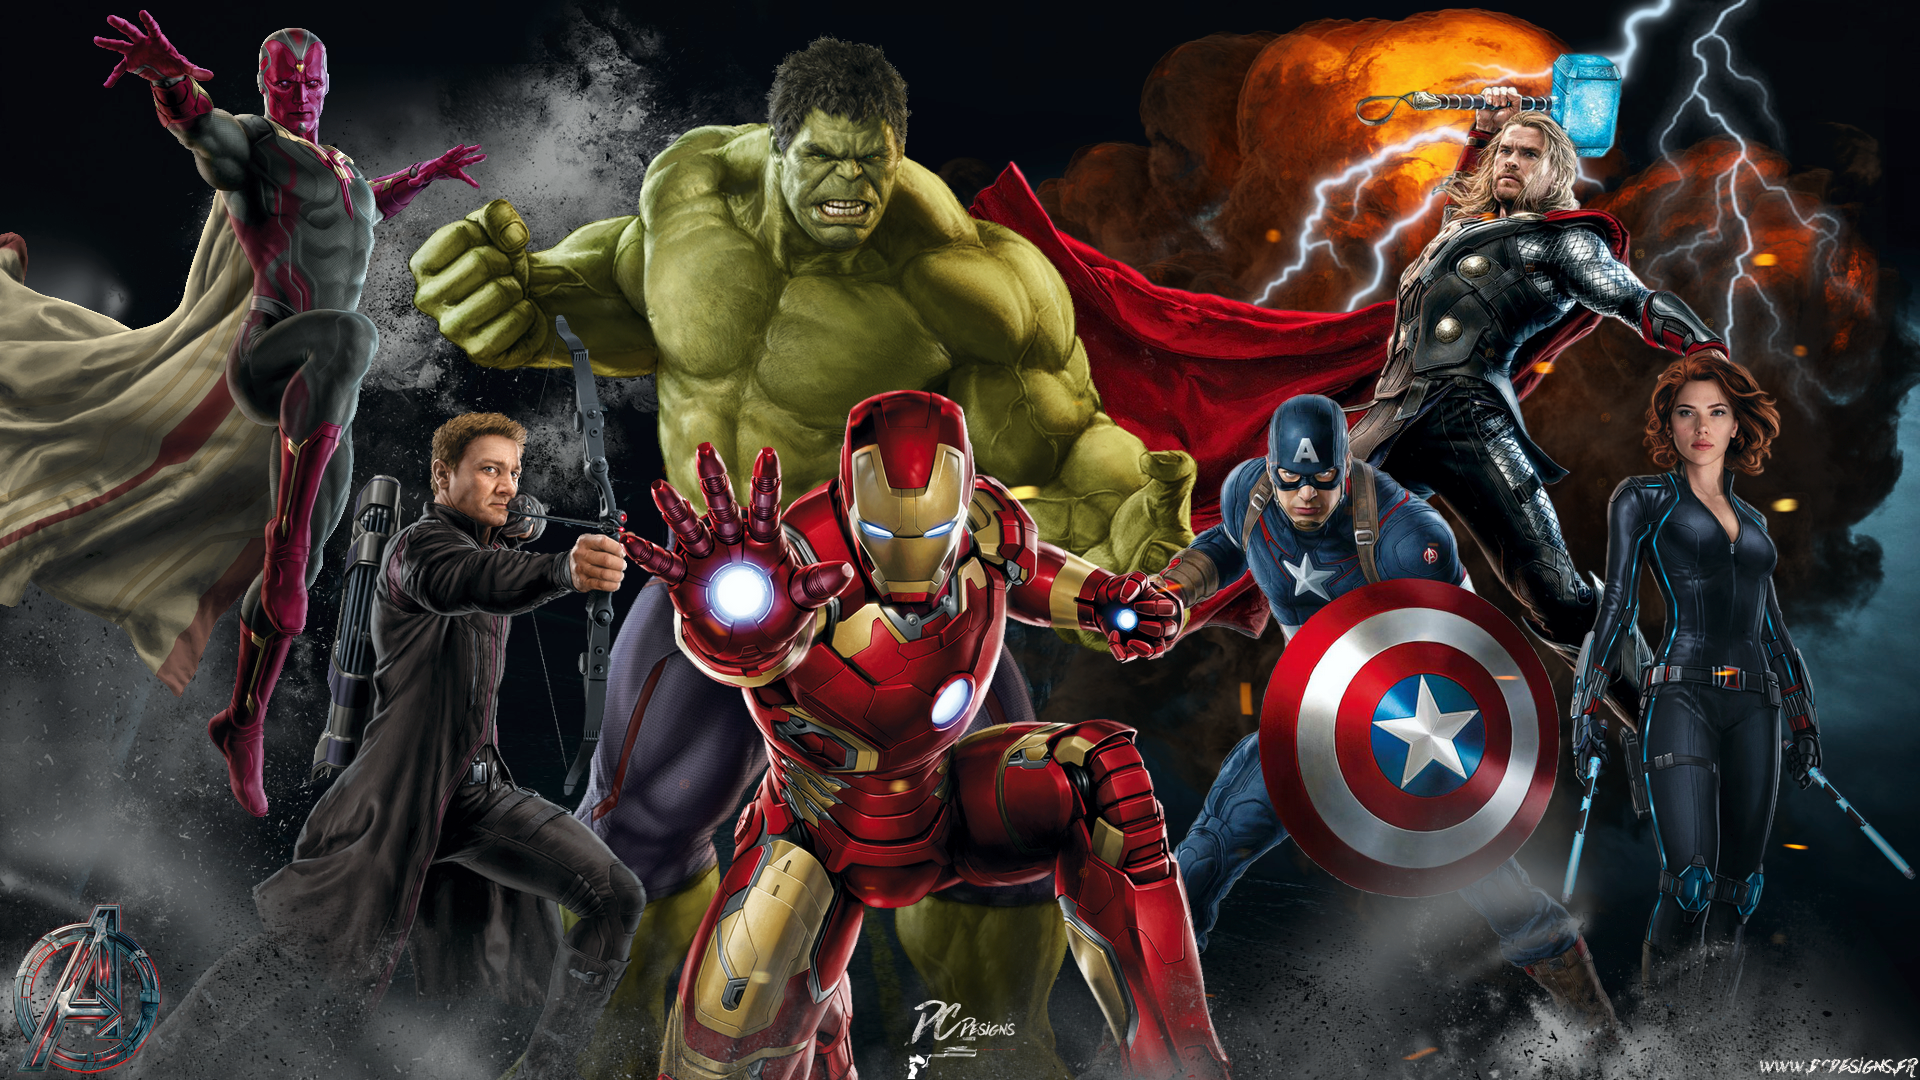 Wallpaper / Marvel Cinematic Universe, Marvel Comics, Iron Man, Thor, Hulk, Vision, Captain America, Black Widow, Hawkeye, Avengers: Age of Ultron, The Avengers